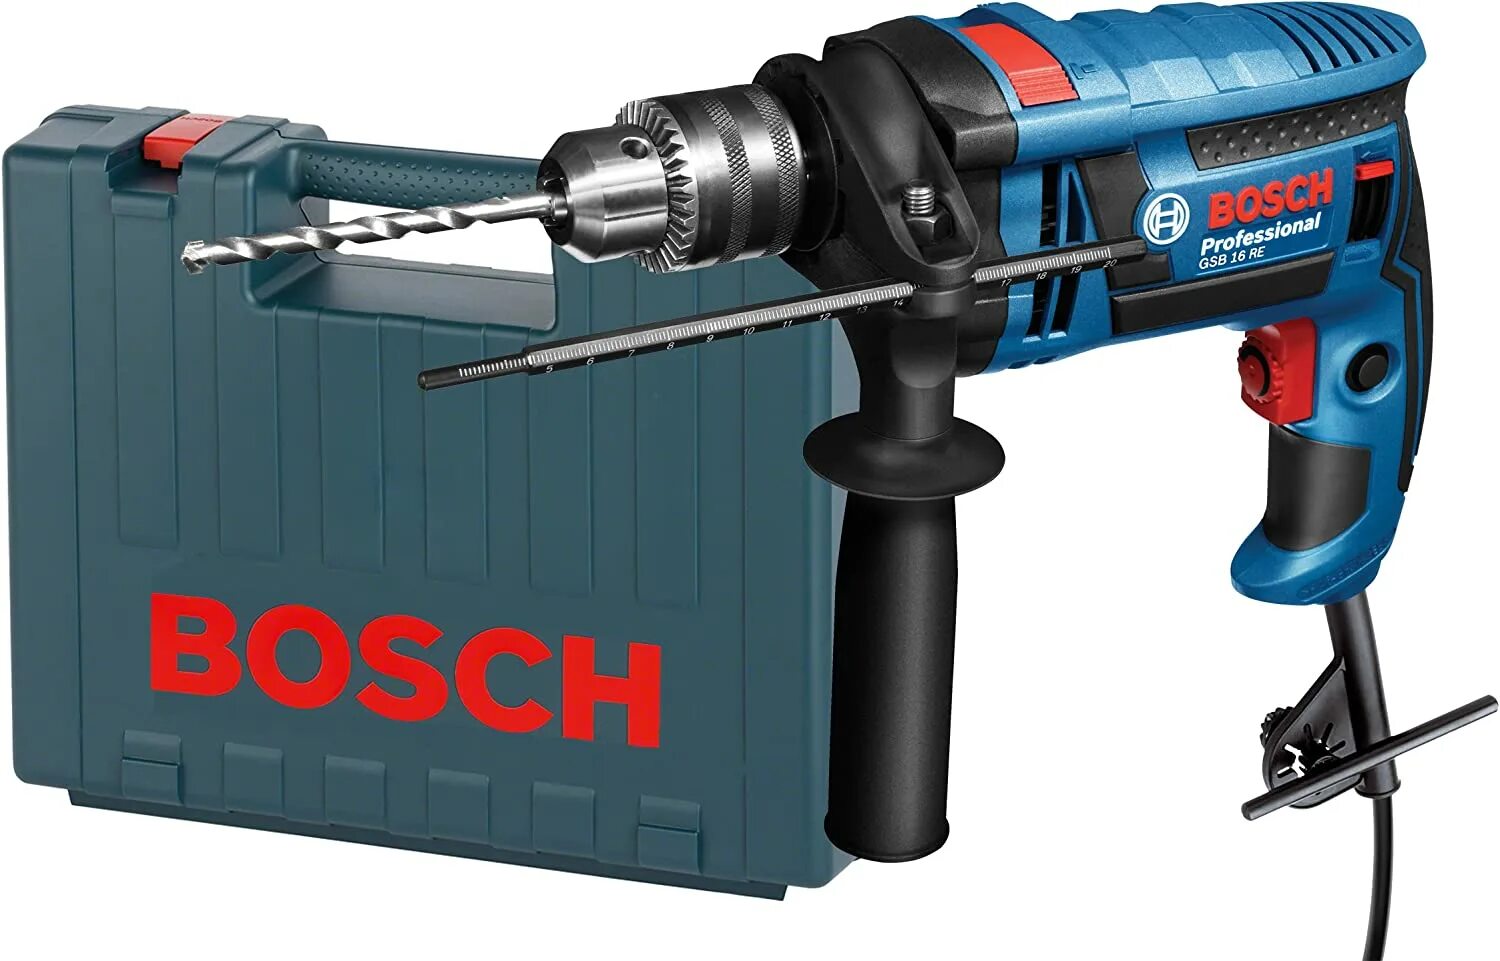 Bosch GSB 16 re. Дрель бош GSB 16. Bosch GSB 16 re professional. Дрель ударная Bosch GSB 16 re professional.